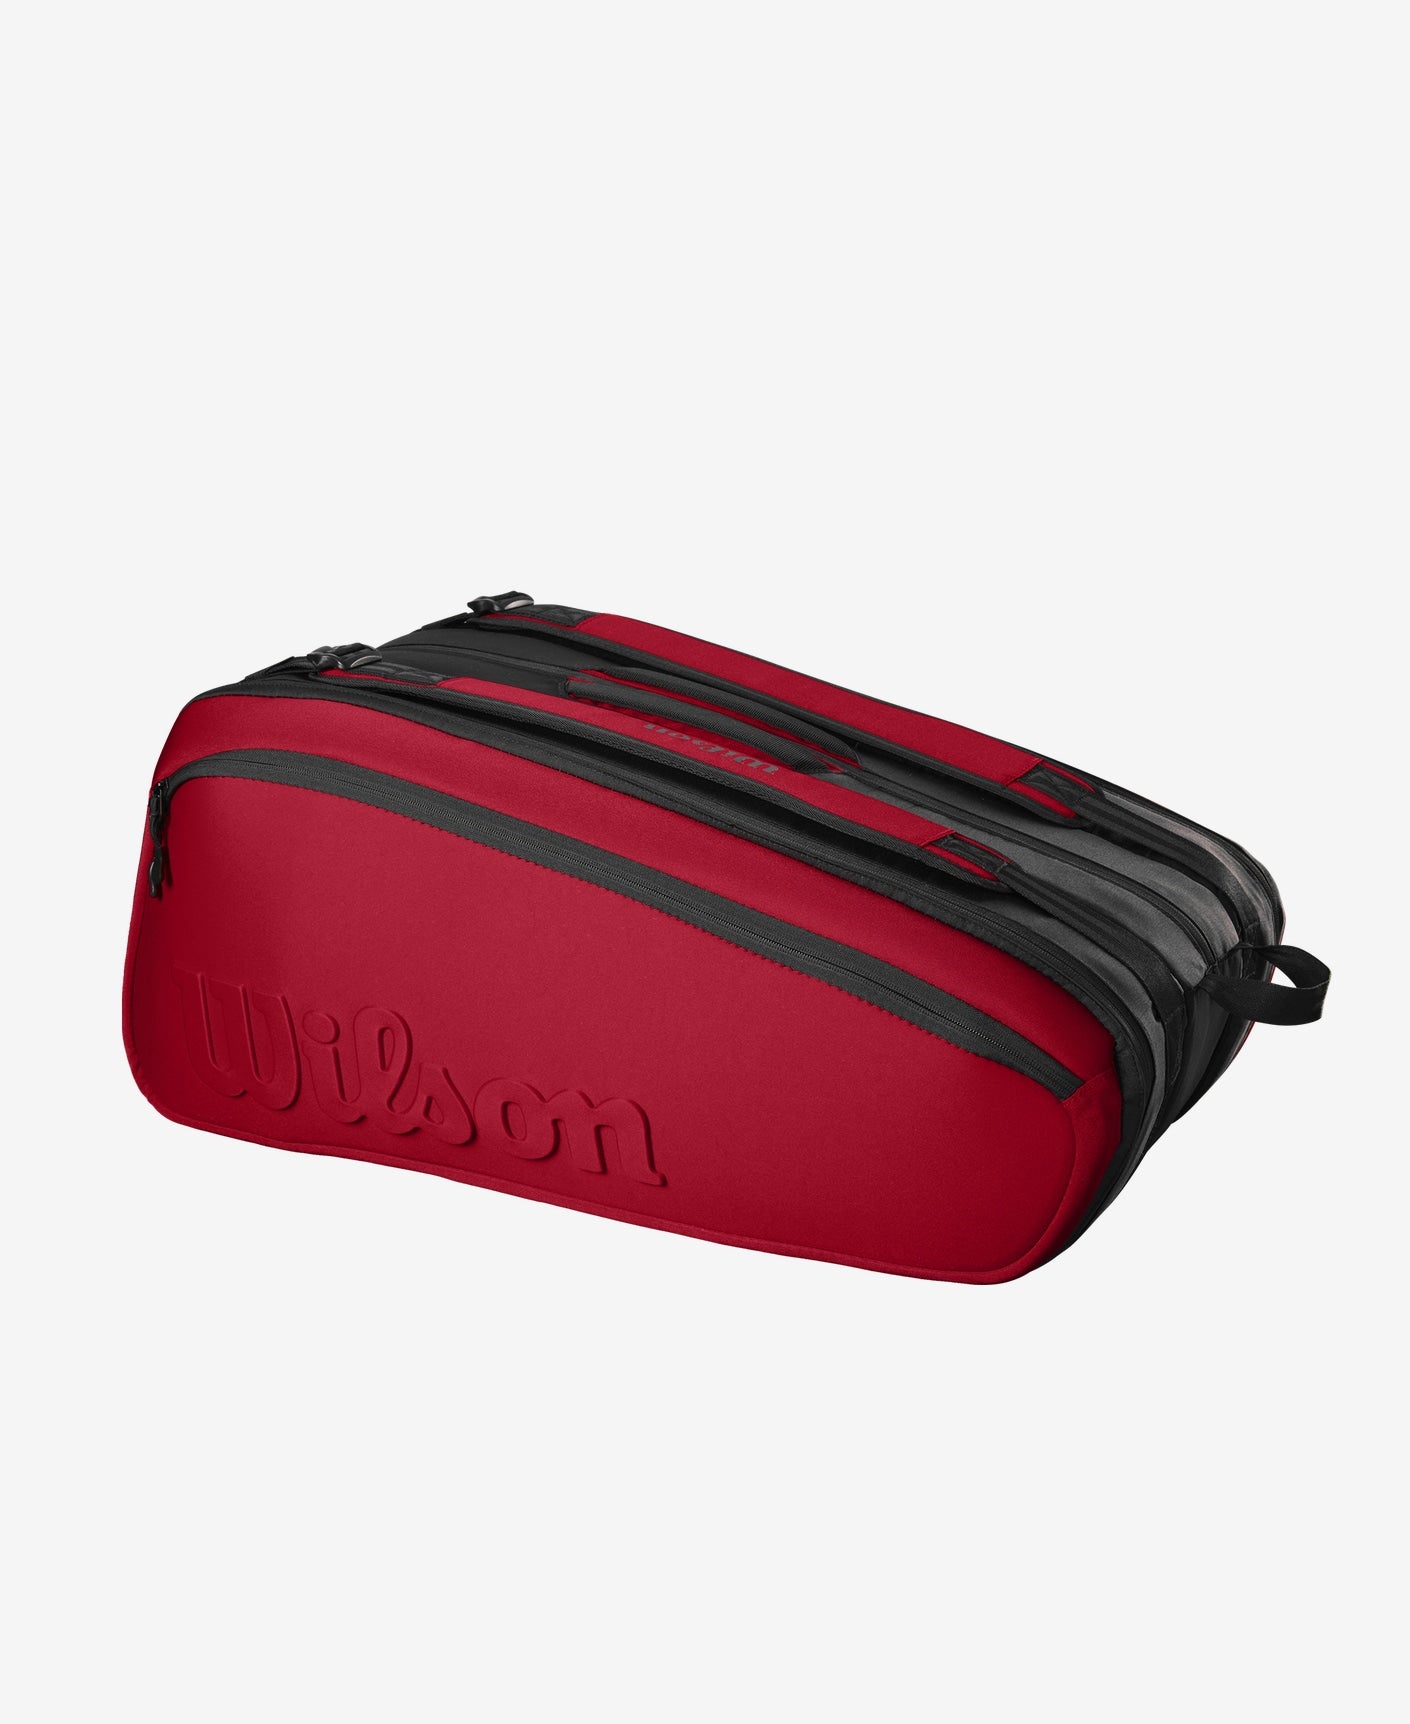 Wilson Clash V2 Super Tour 15 Pack Tennis Bag in Striking Red Hue